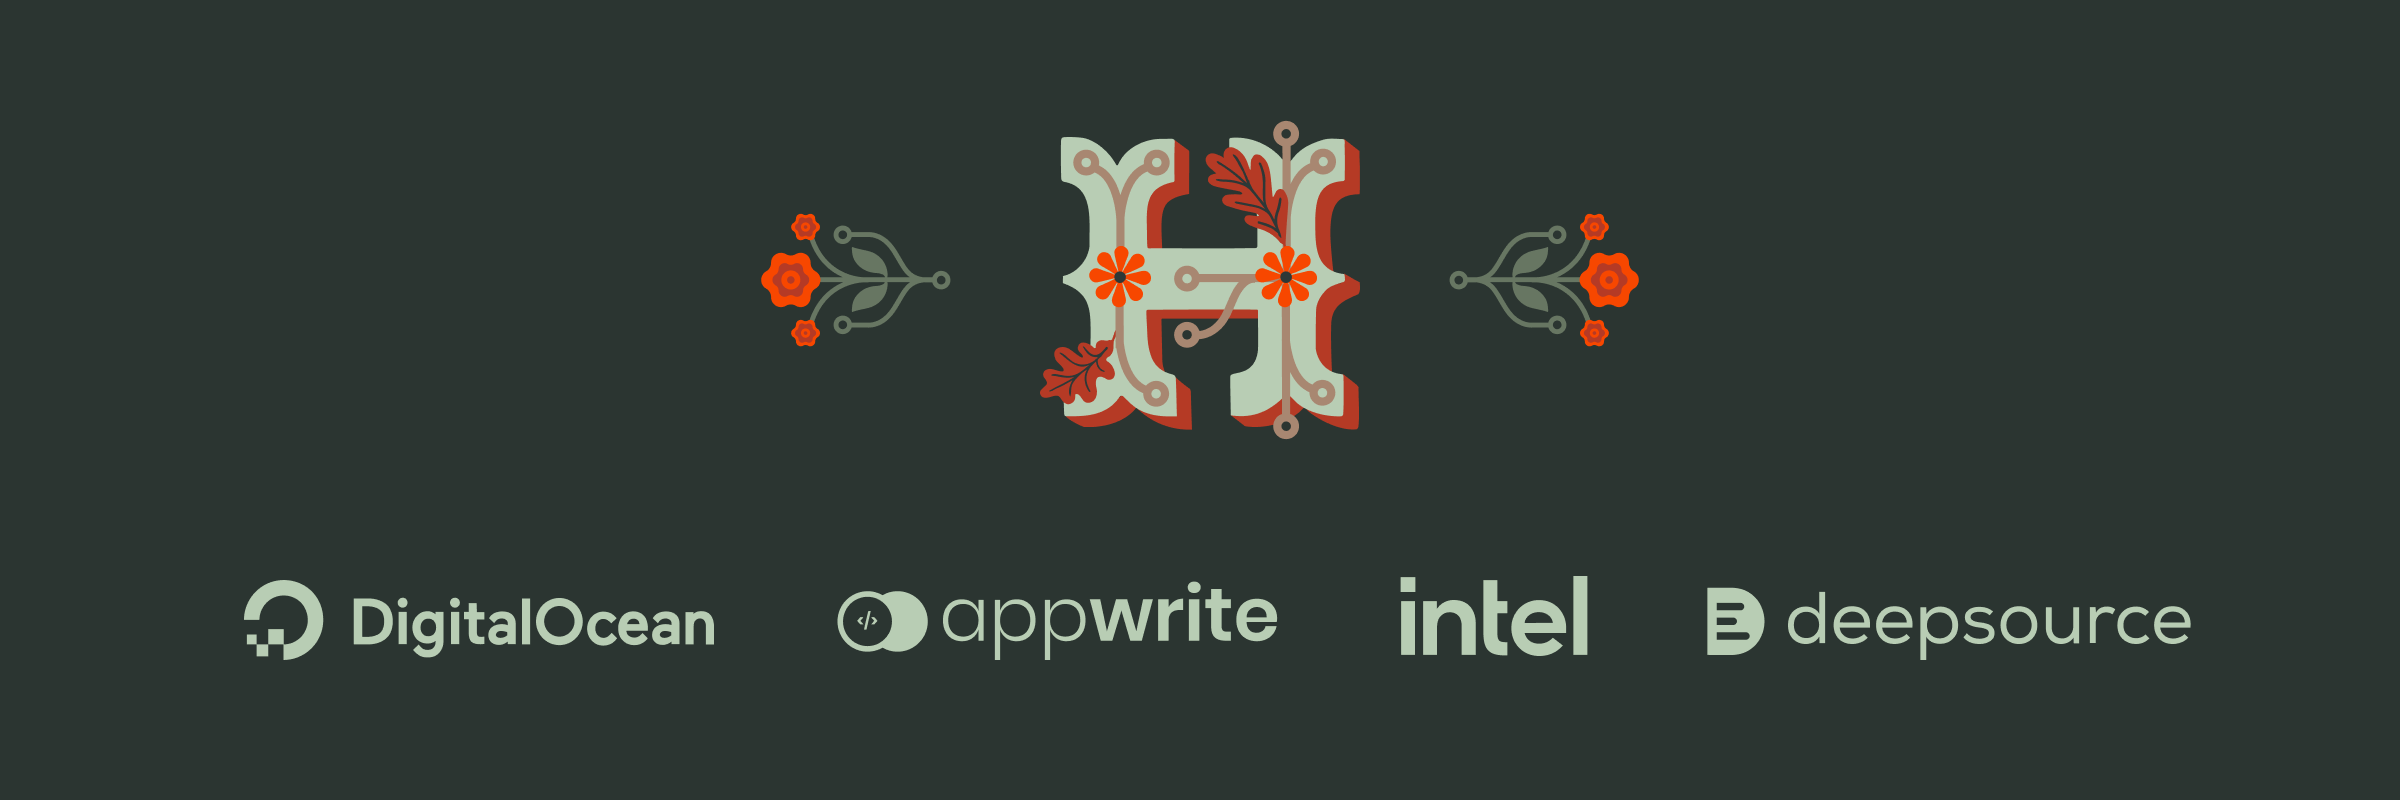 H letter - Hacktoberfest logo